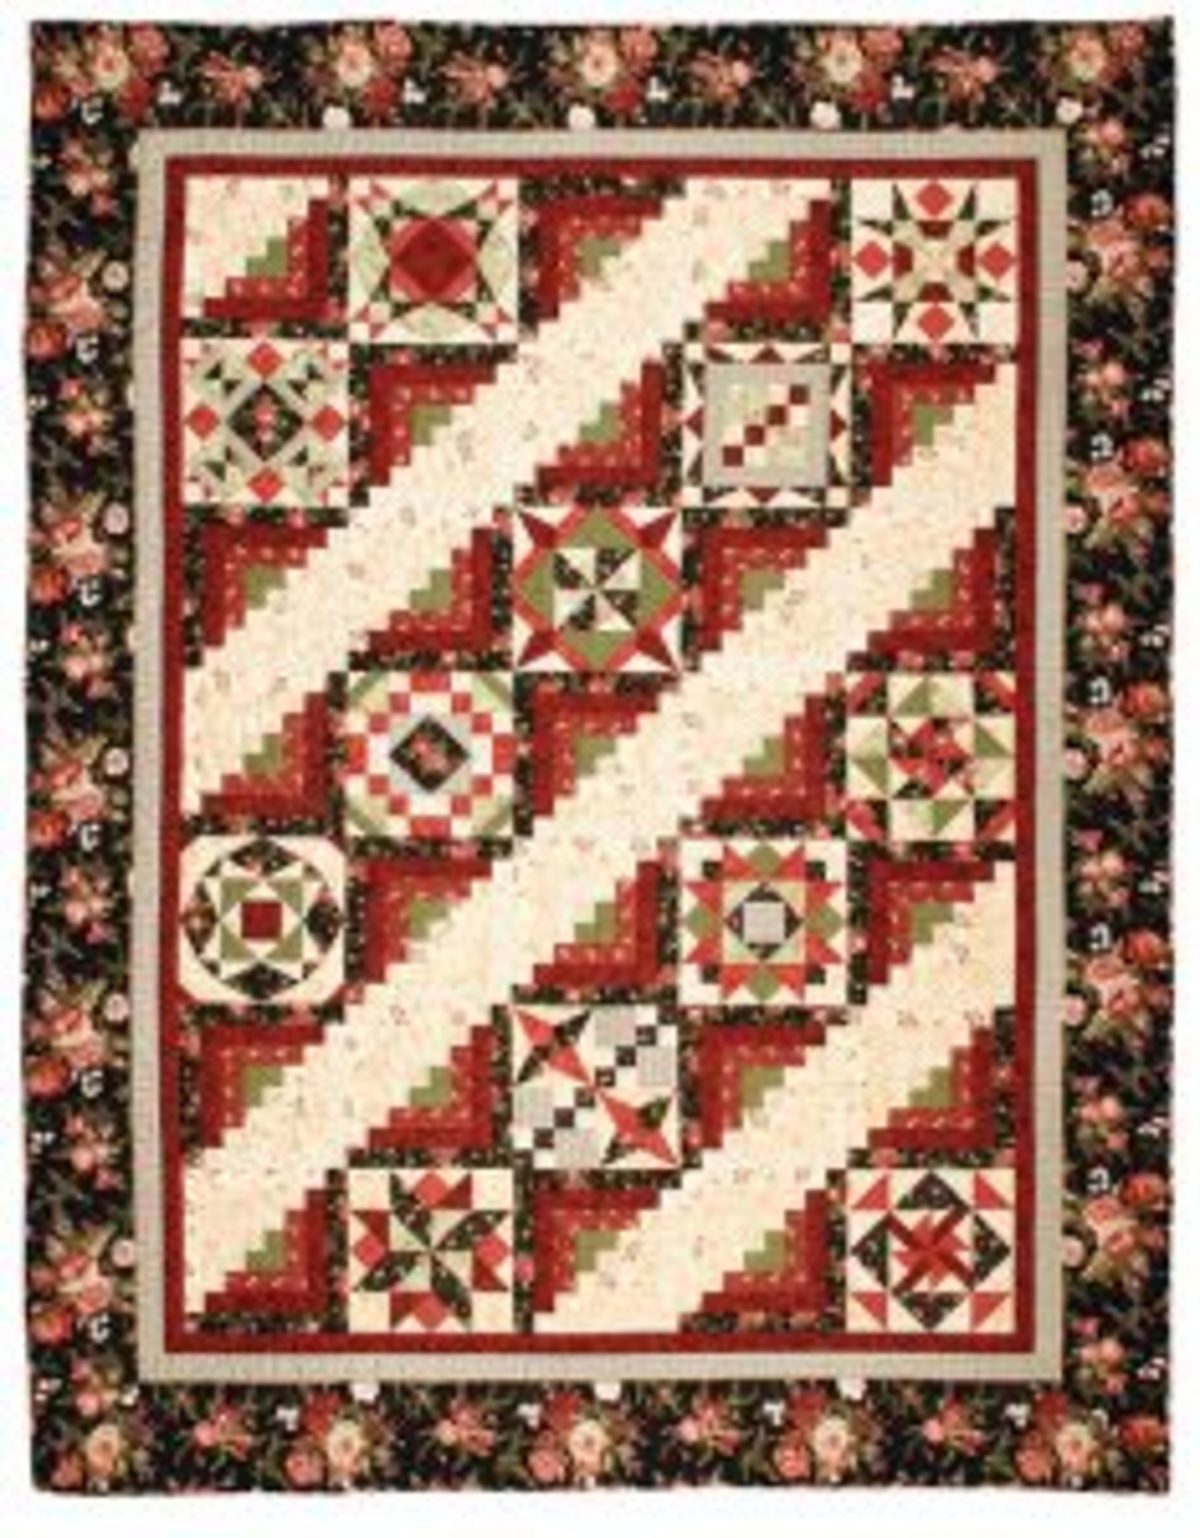 exposition Marti MICHELL-Carrefour europeen patchwork quilt antique